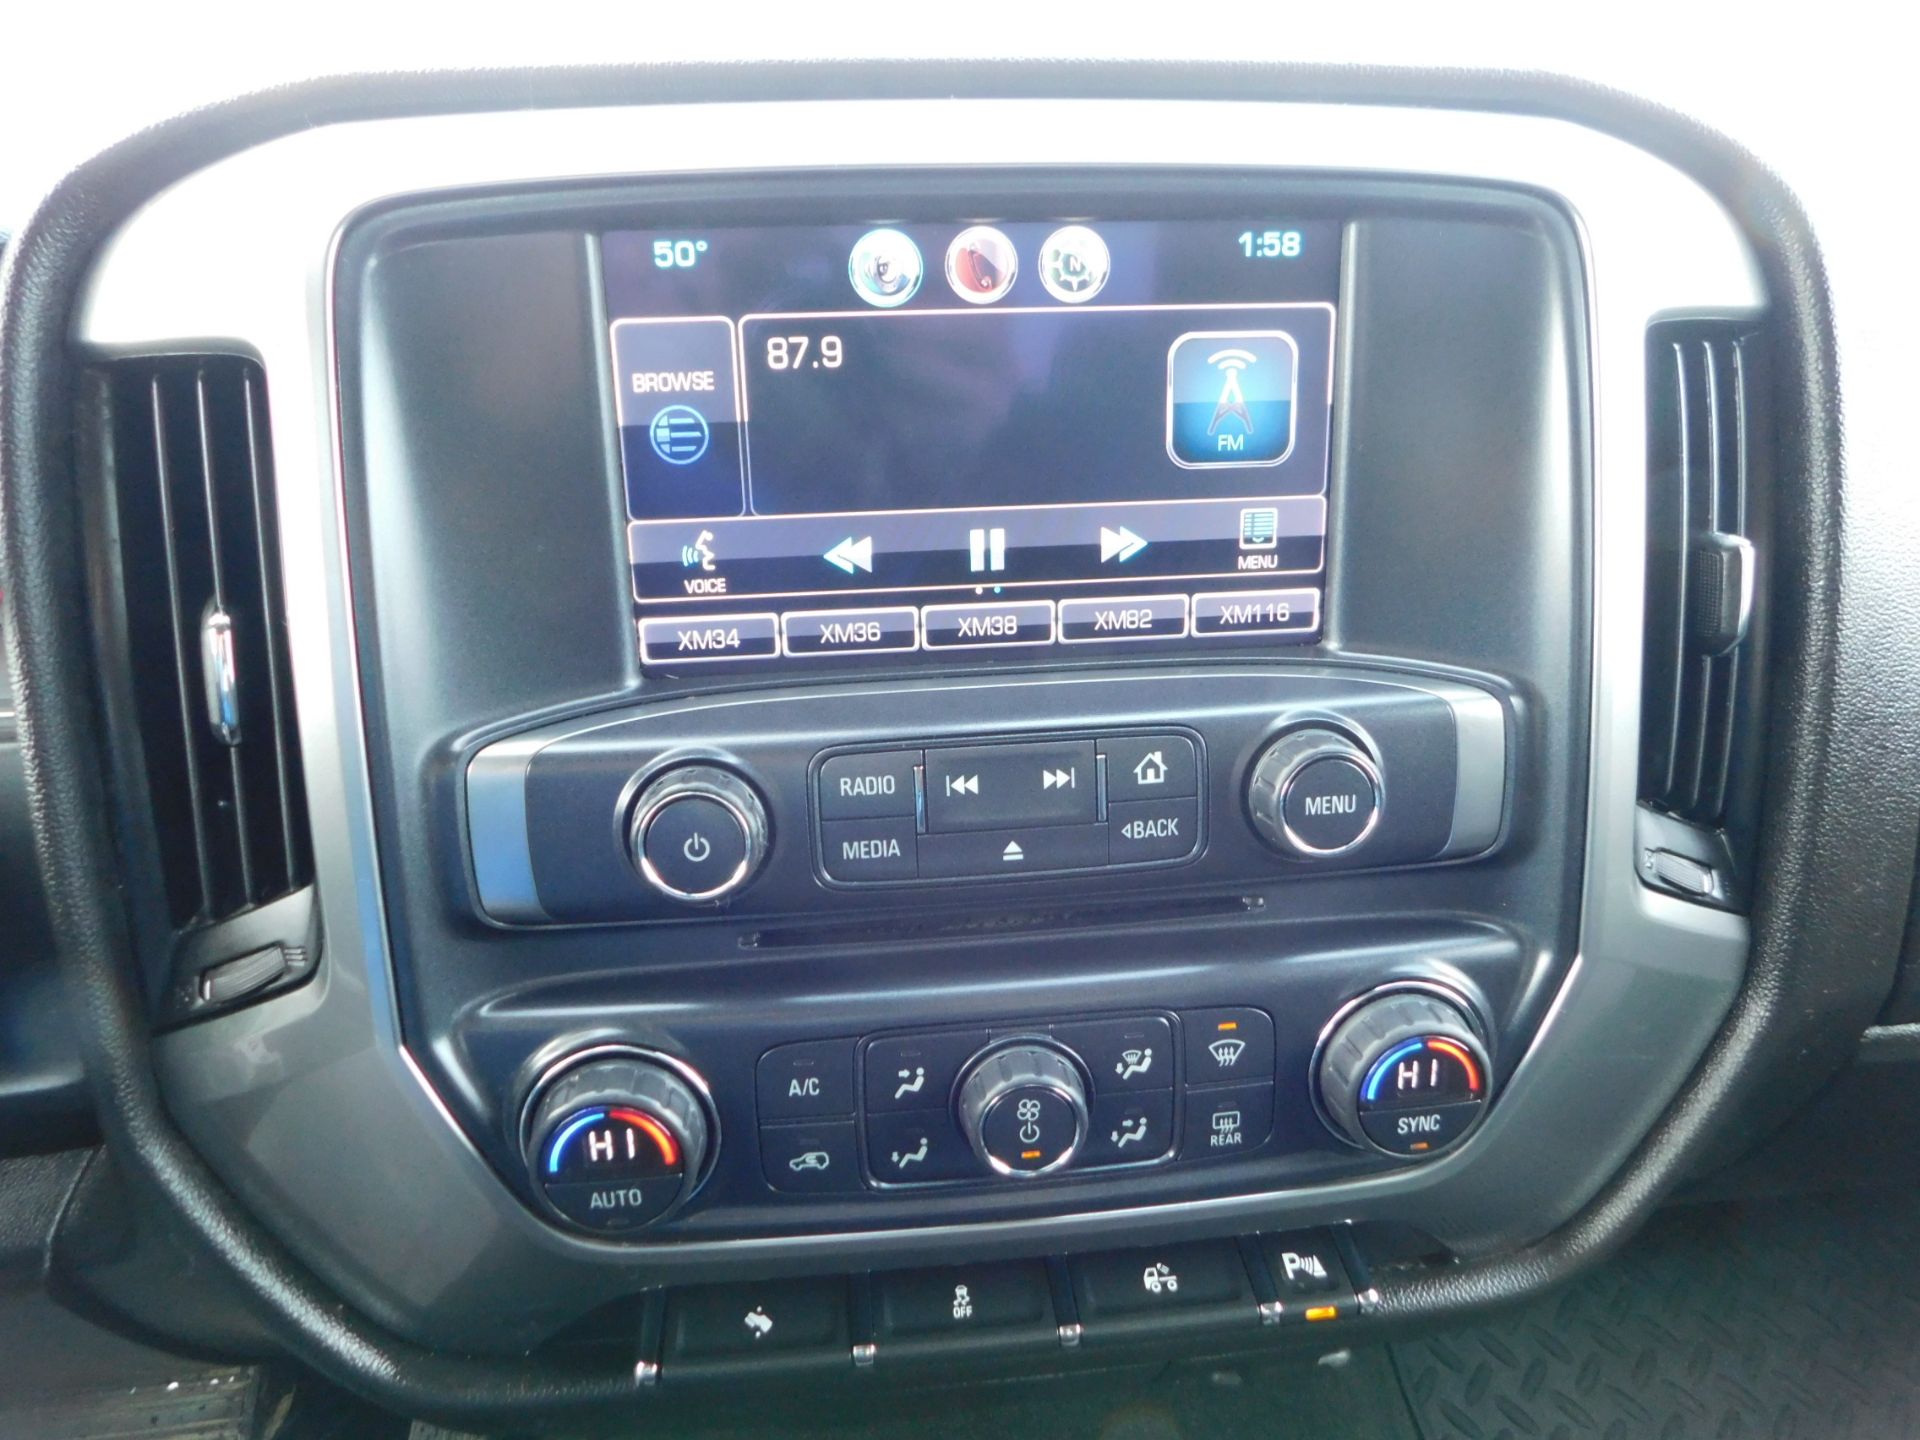 2014 Chevrolet Silverado LT Pickup, VIN 1GCVKREC3EZ139405, 4-Door 4 WD, Automatic, AM/FM, AC, Cruise - Image 47 of 51